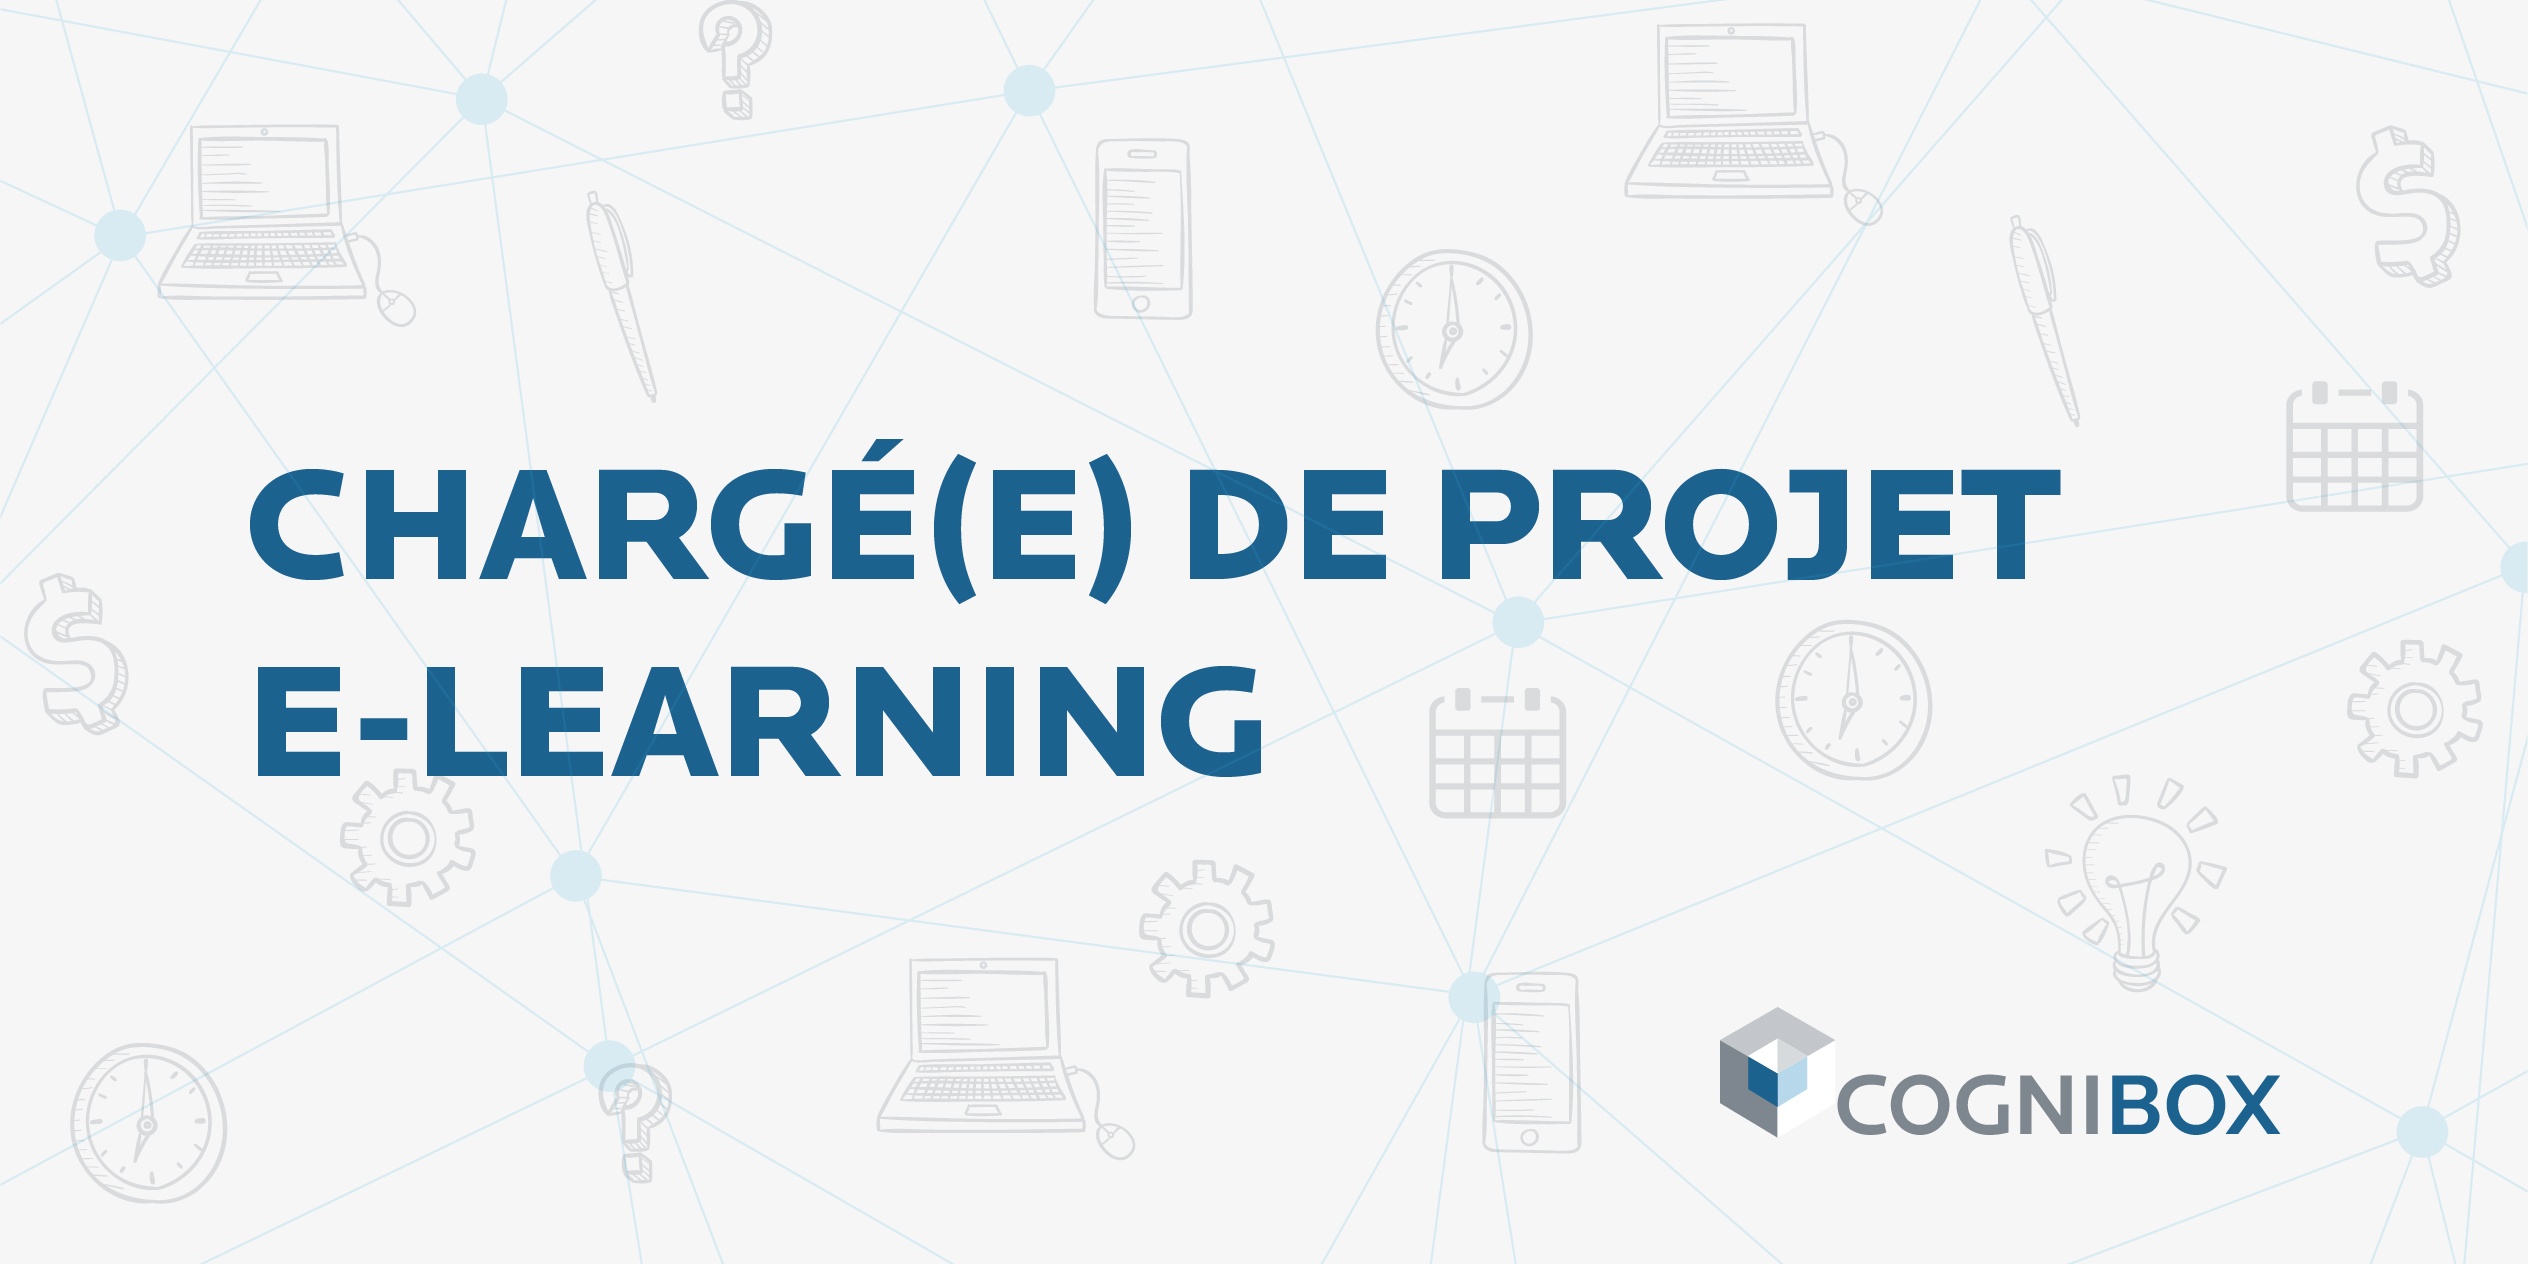 Chargé(e) de projet e-learning